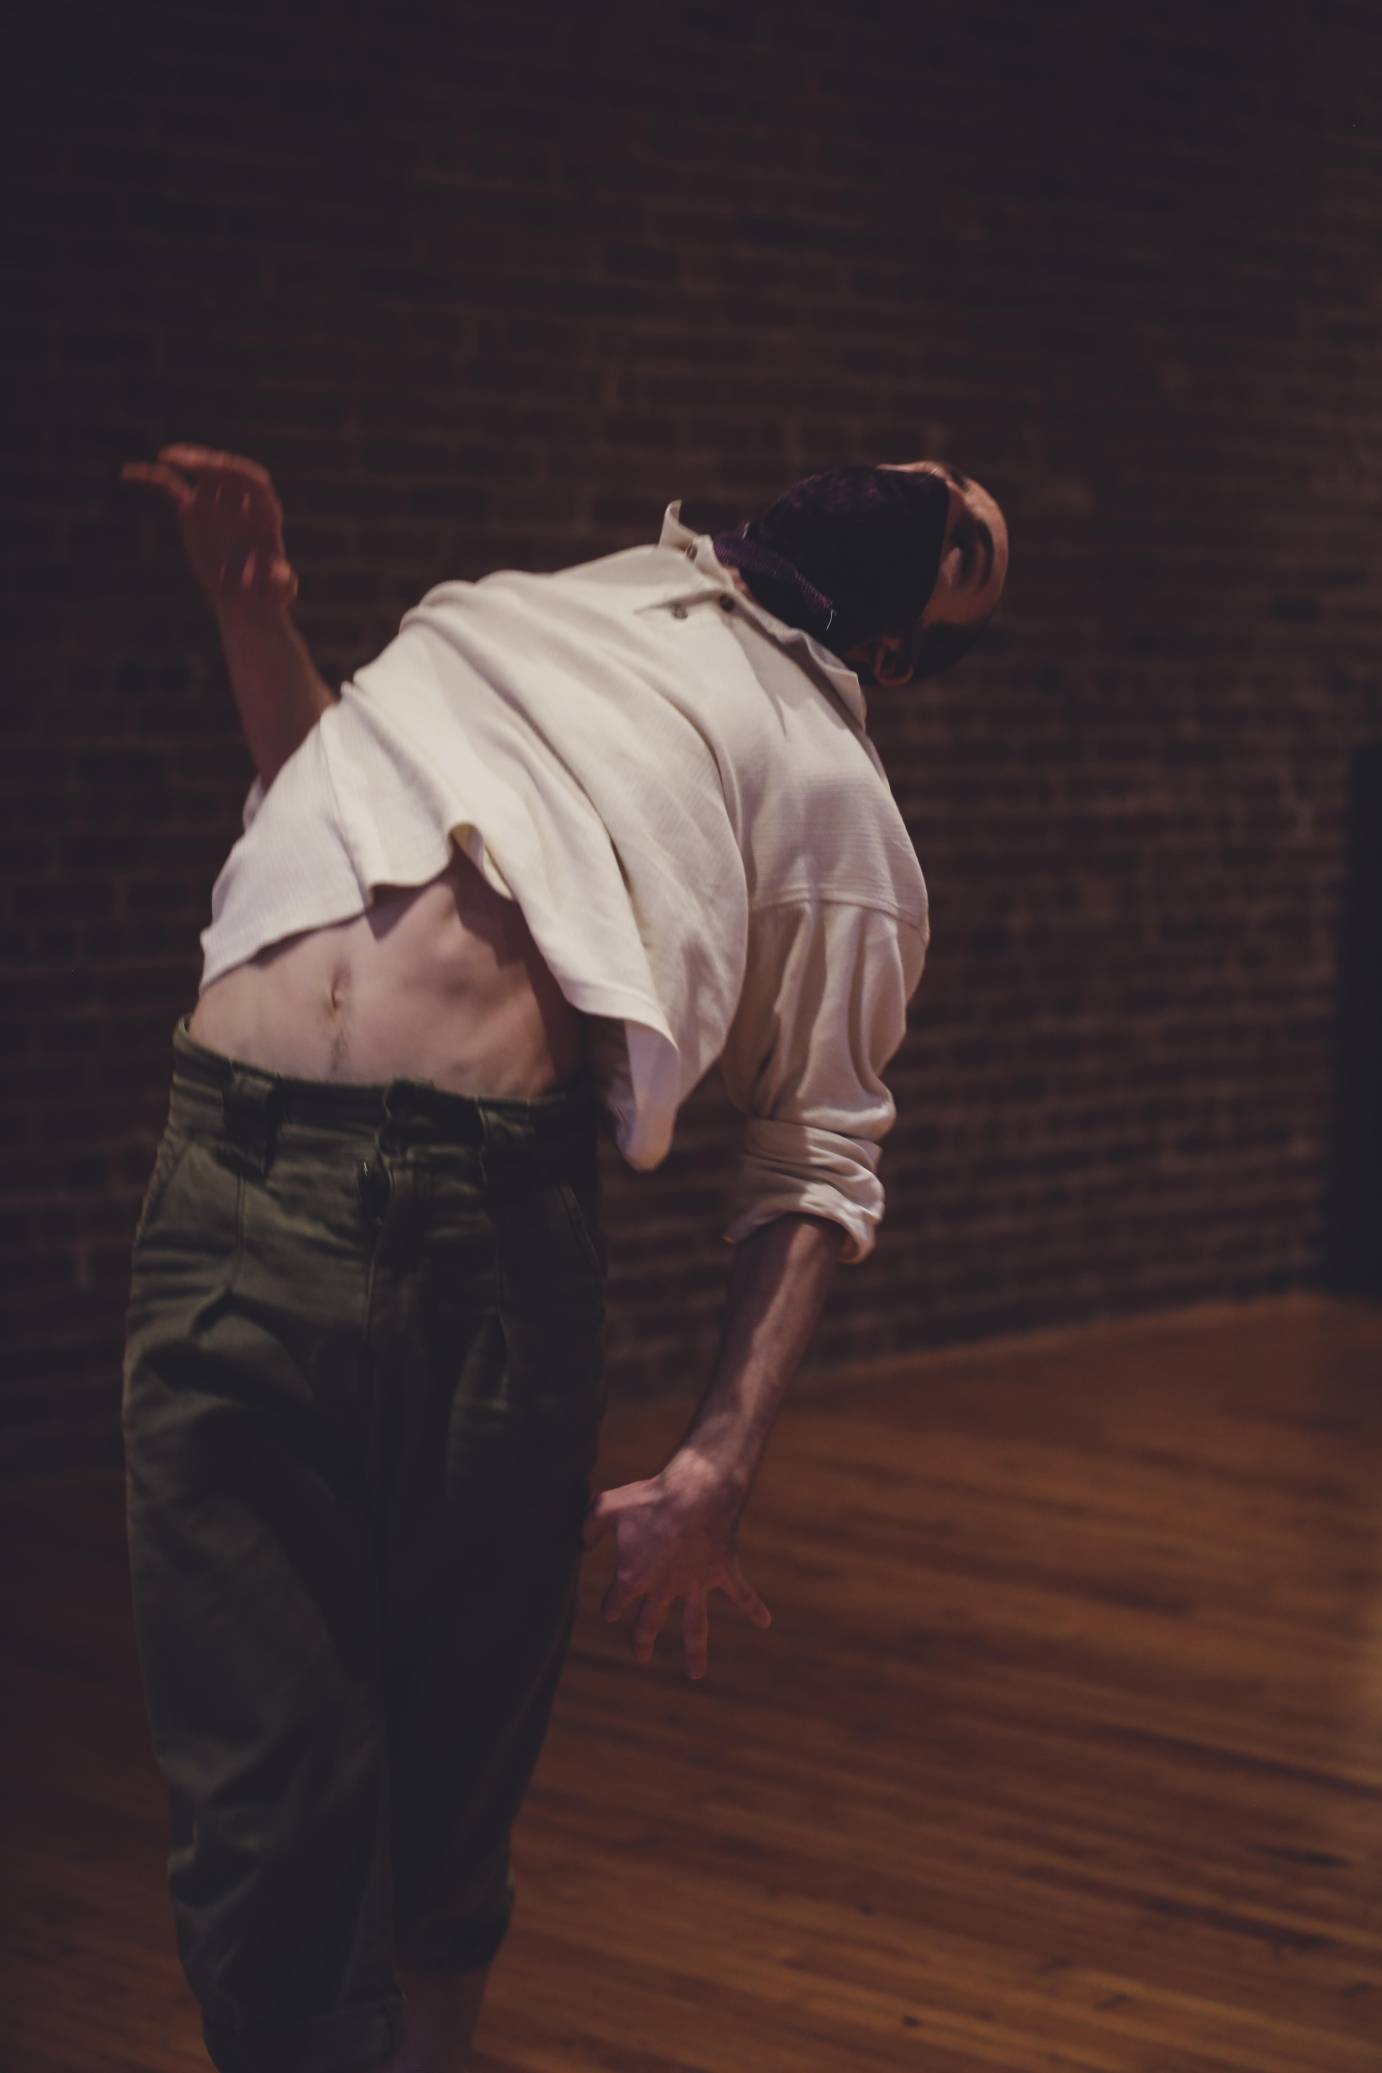 Jason Cianciulli arches backward, part of his stomach exposed